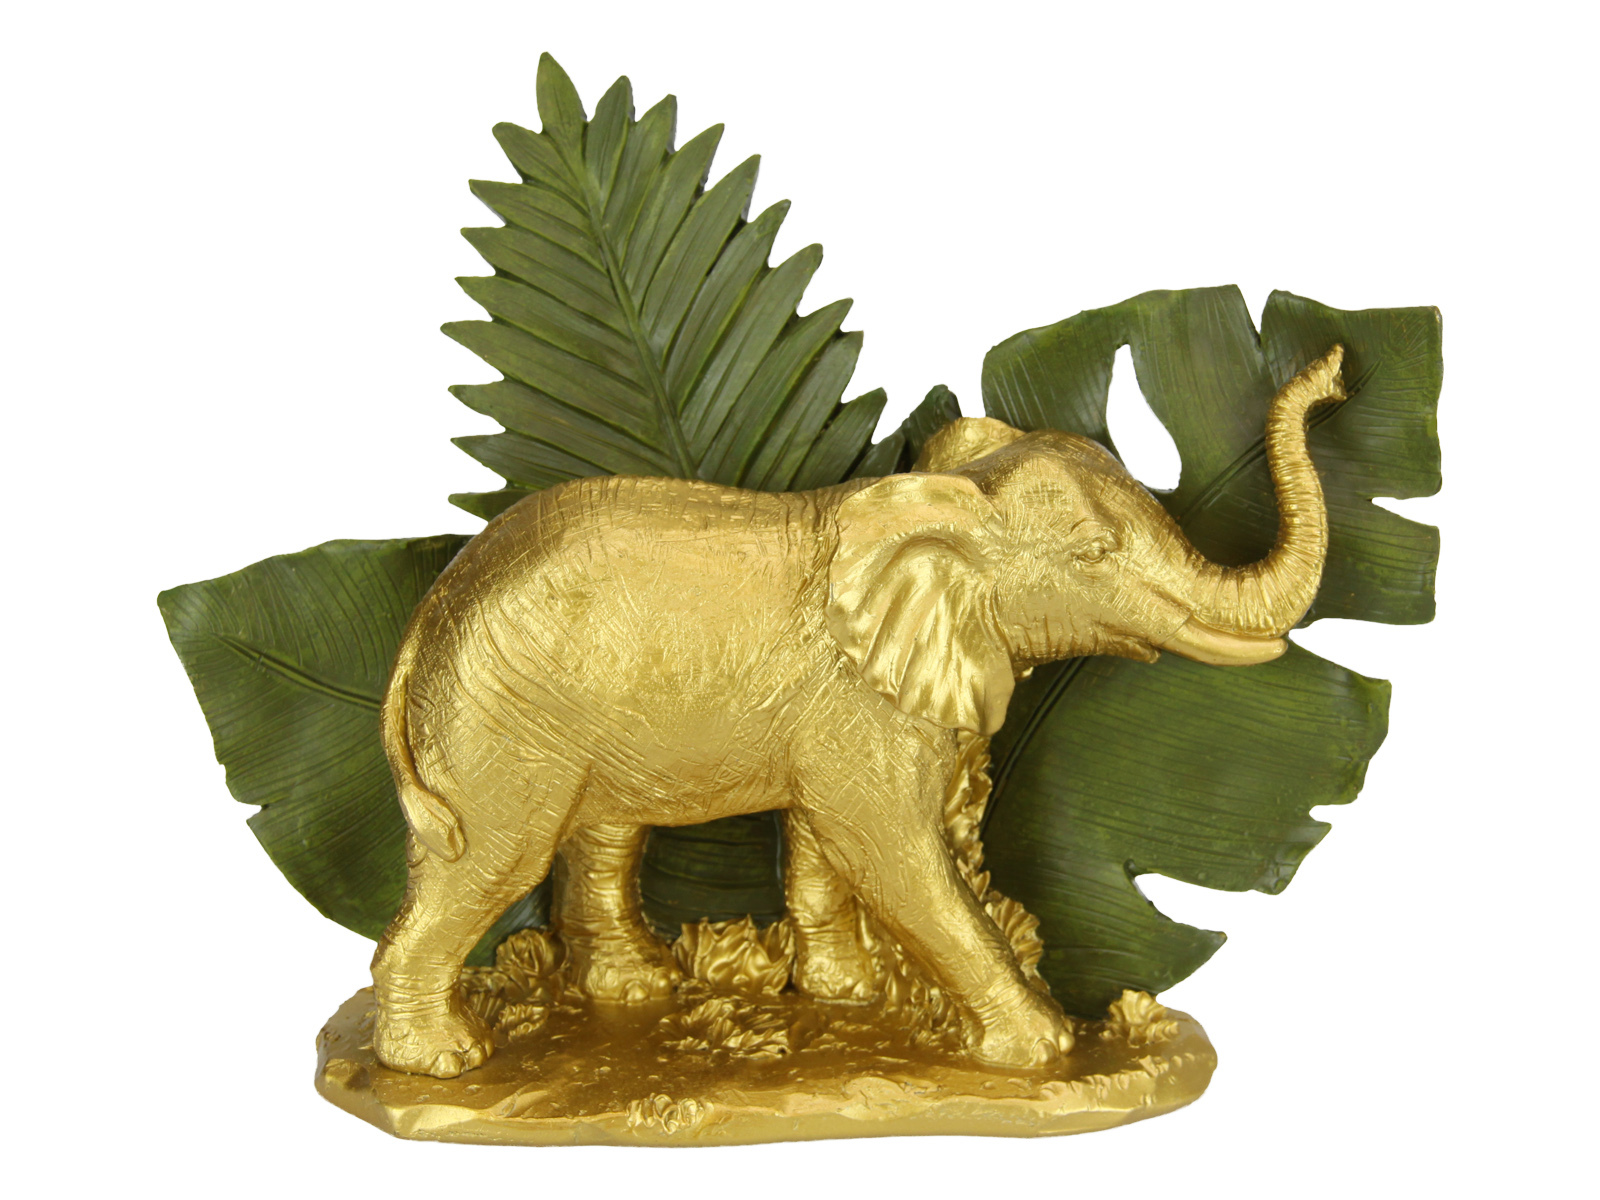 Gold Elephant Statue In Greenery Jungle Scene Ornate Ornament 23cm Resin 1pce